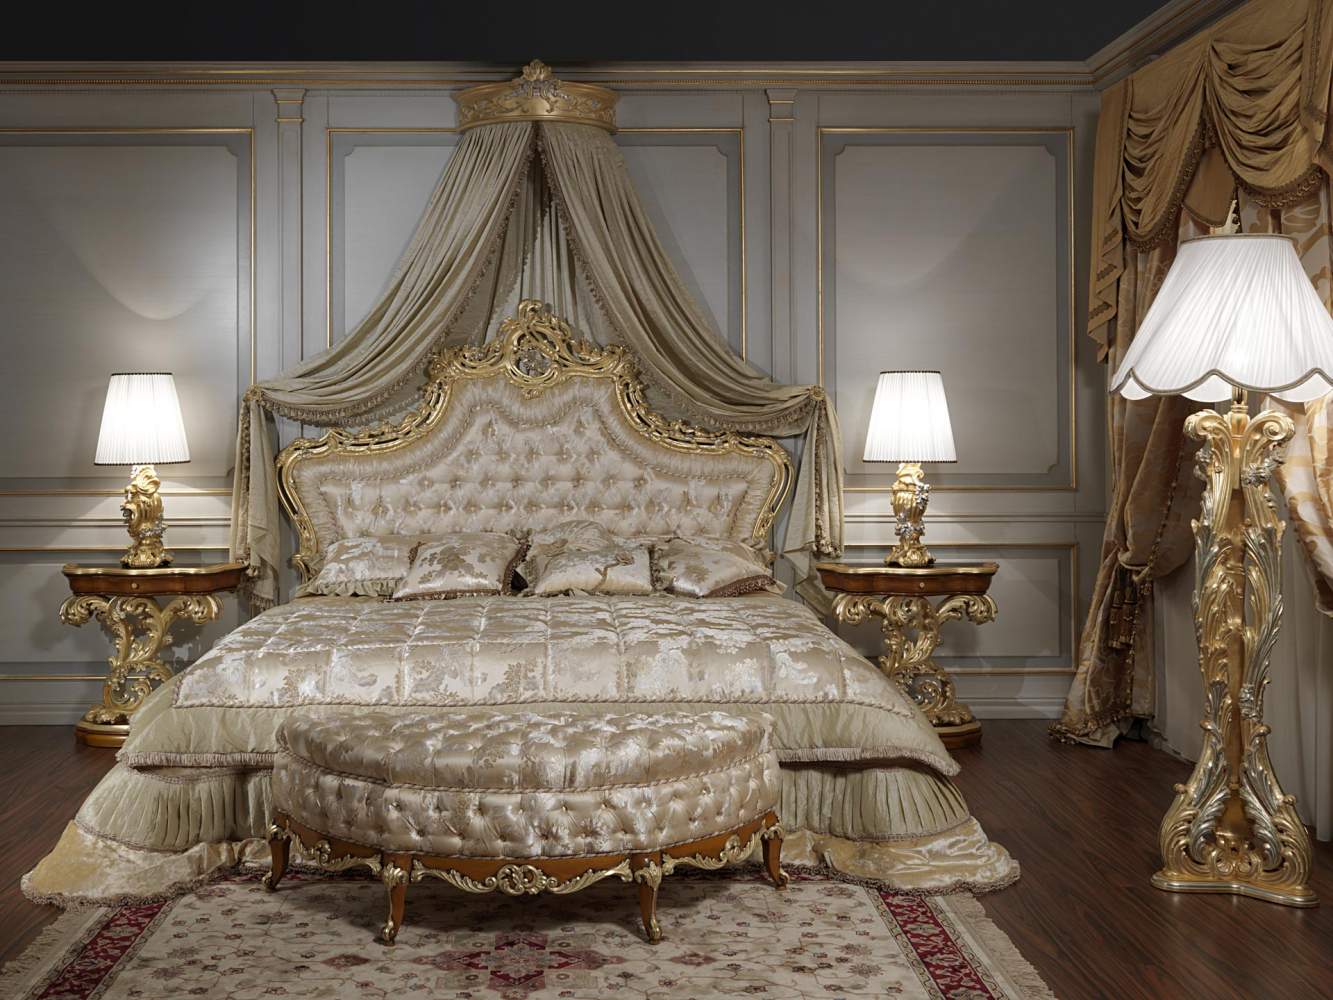 Roman baroque bed art 2012